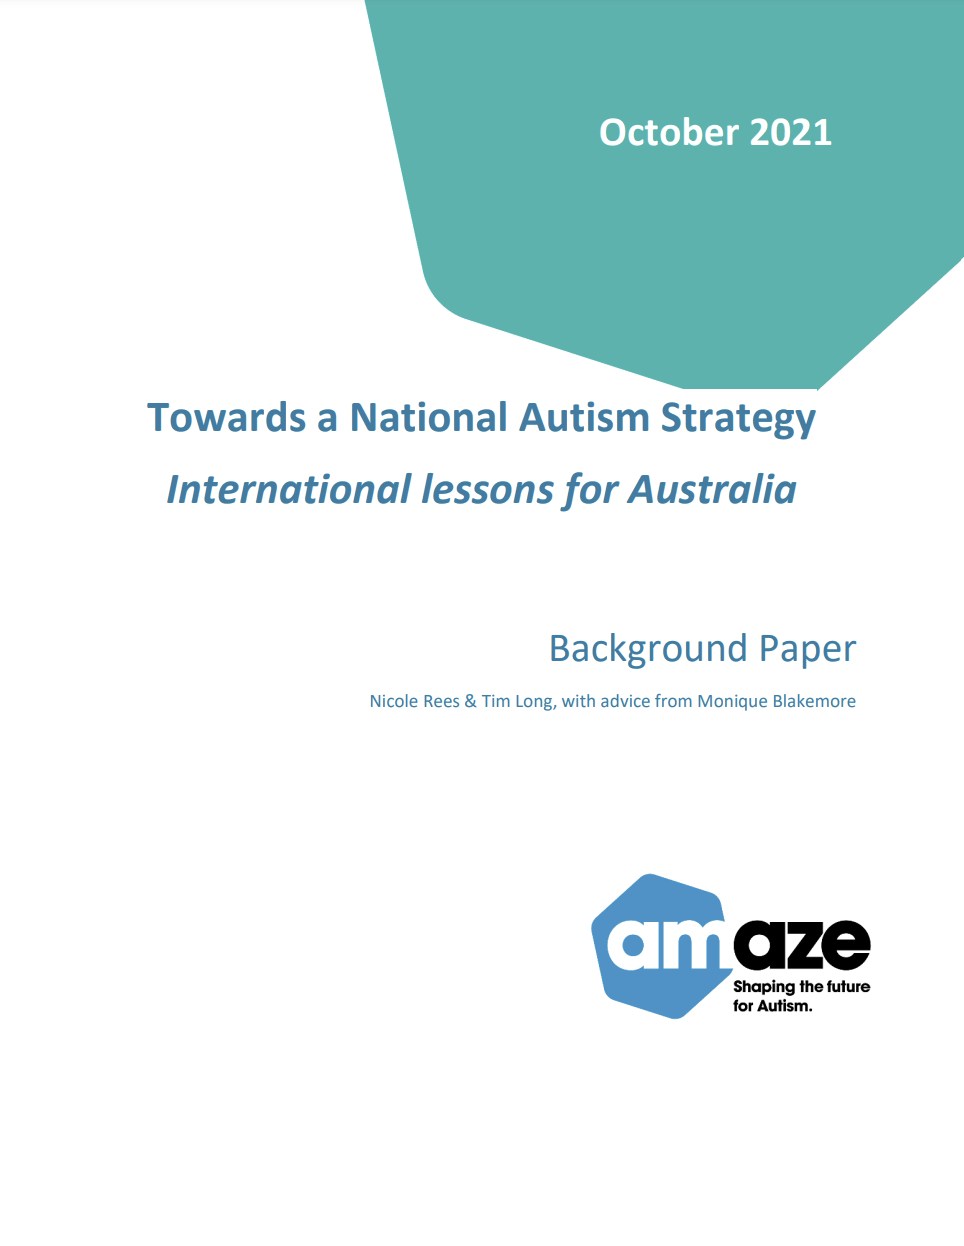 [Australie] « Towards a National Autism Strategy – International lessons for Australia » (Amaze.org.au, 2021)